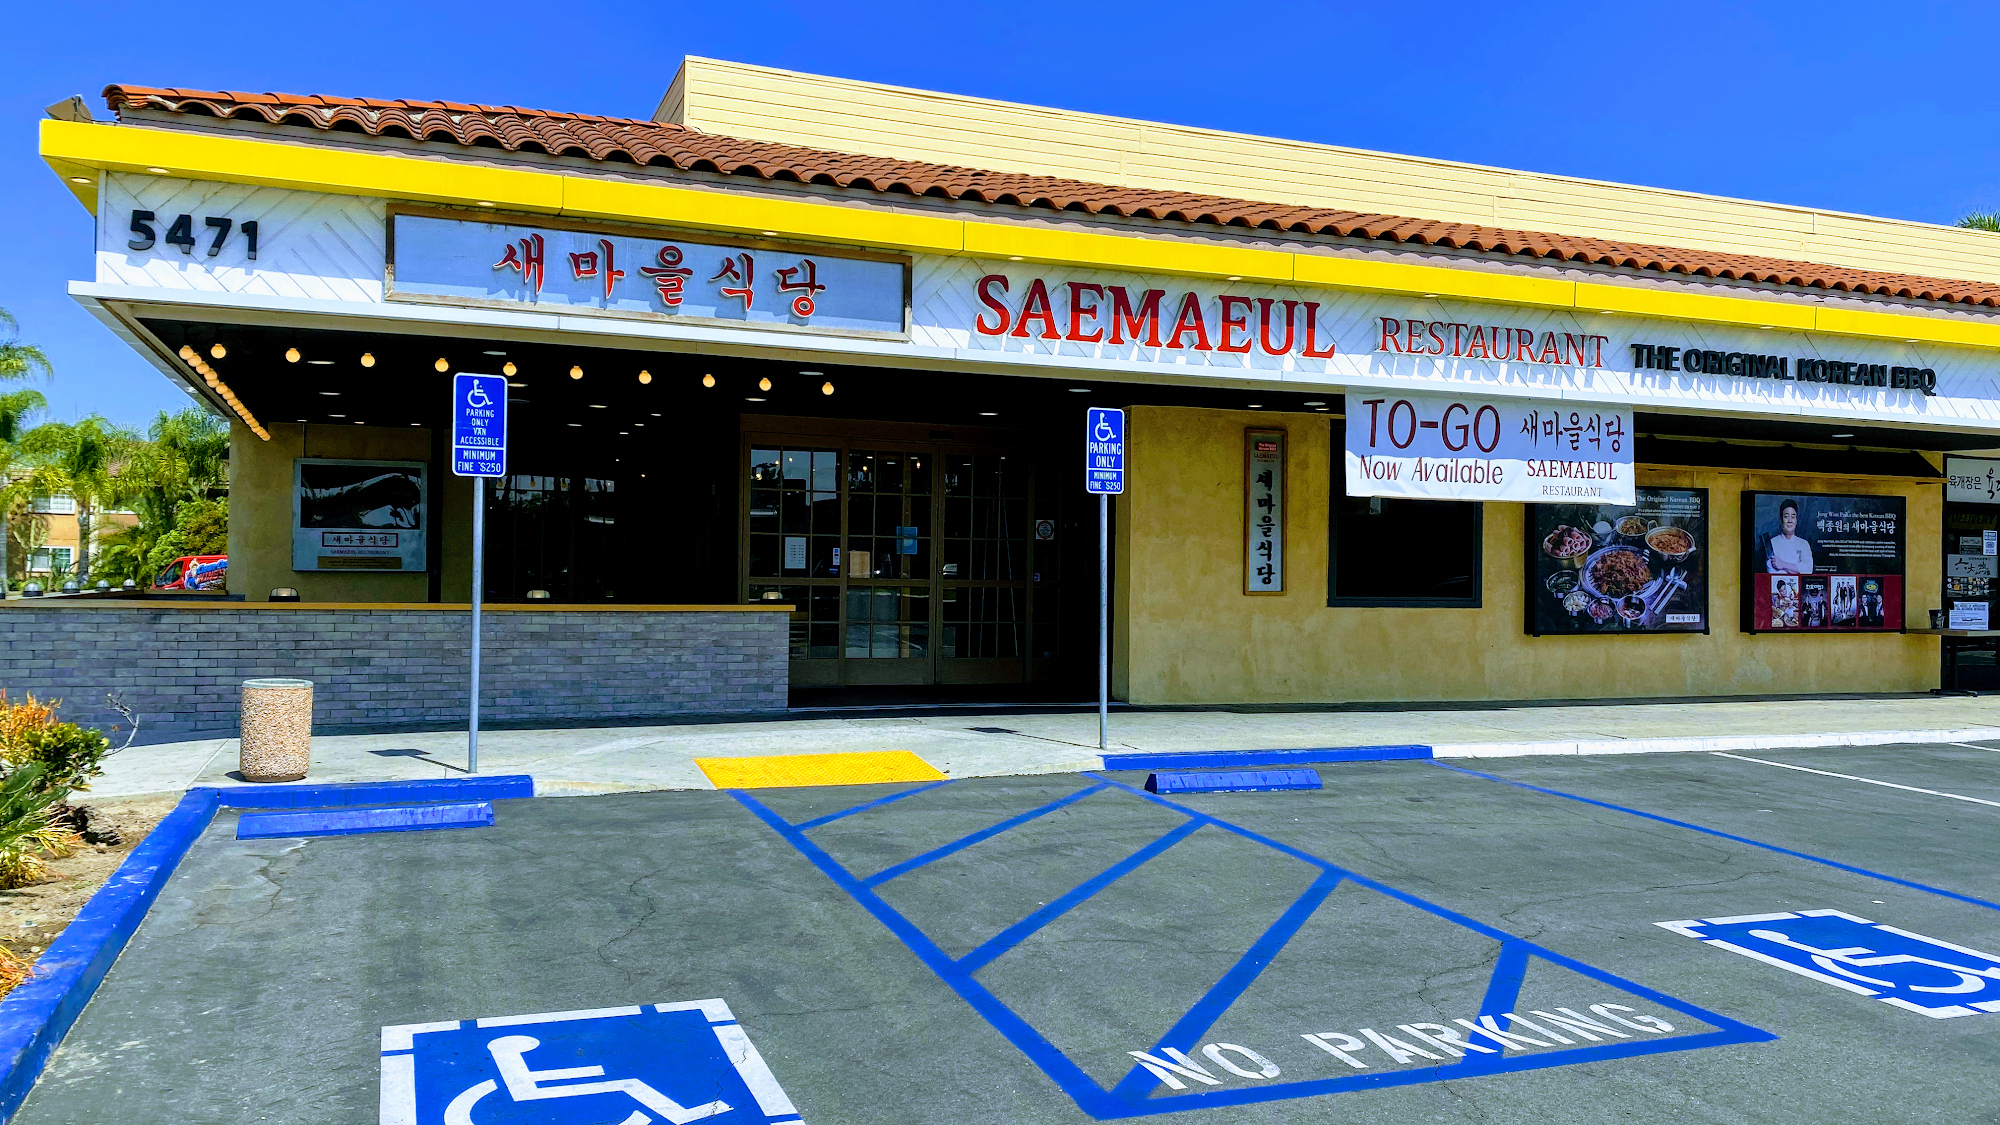 Saemaeul Restaurant